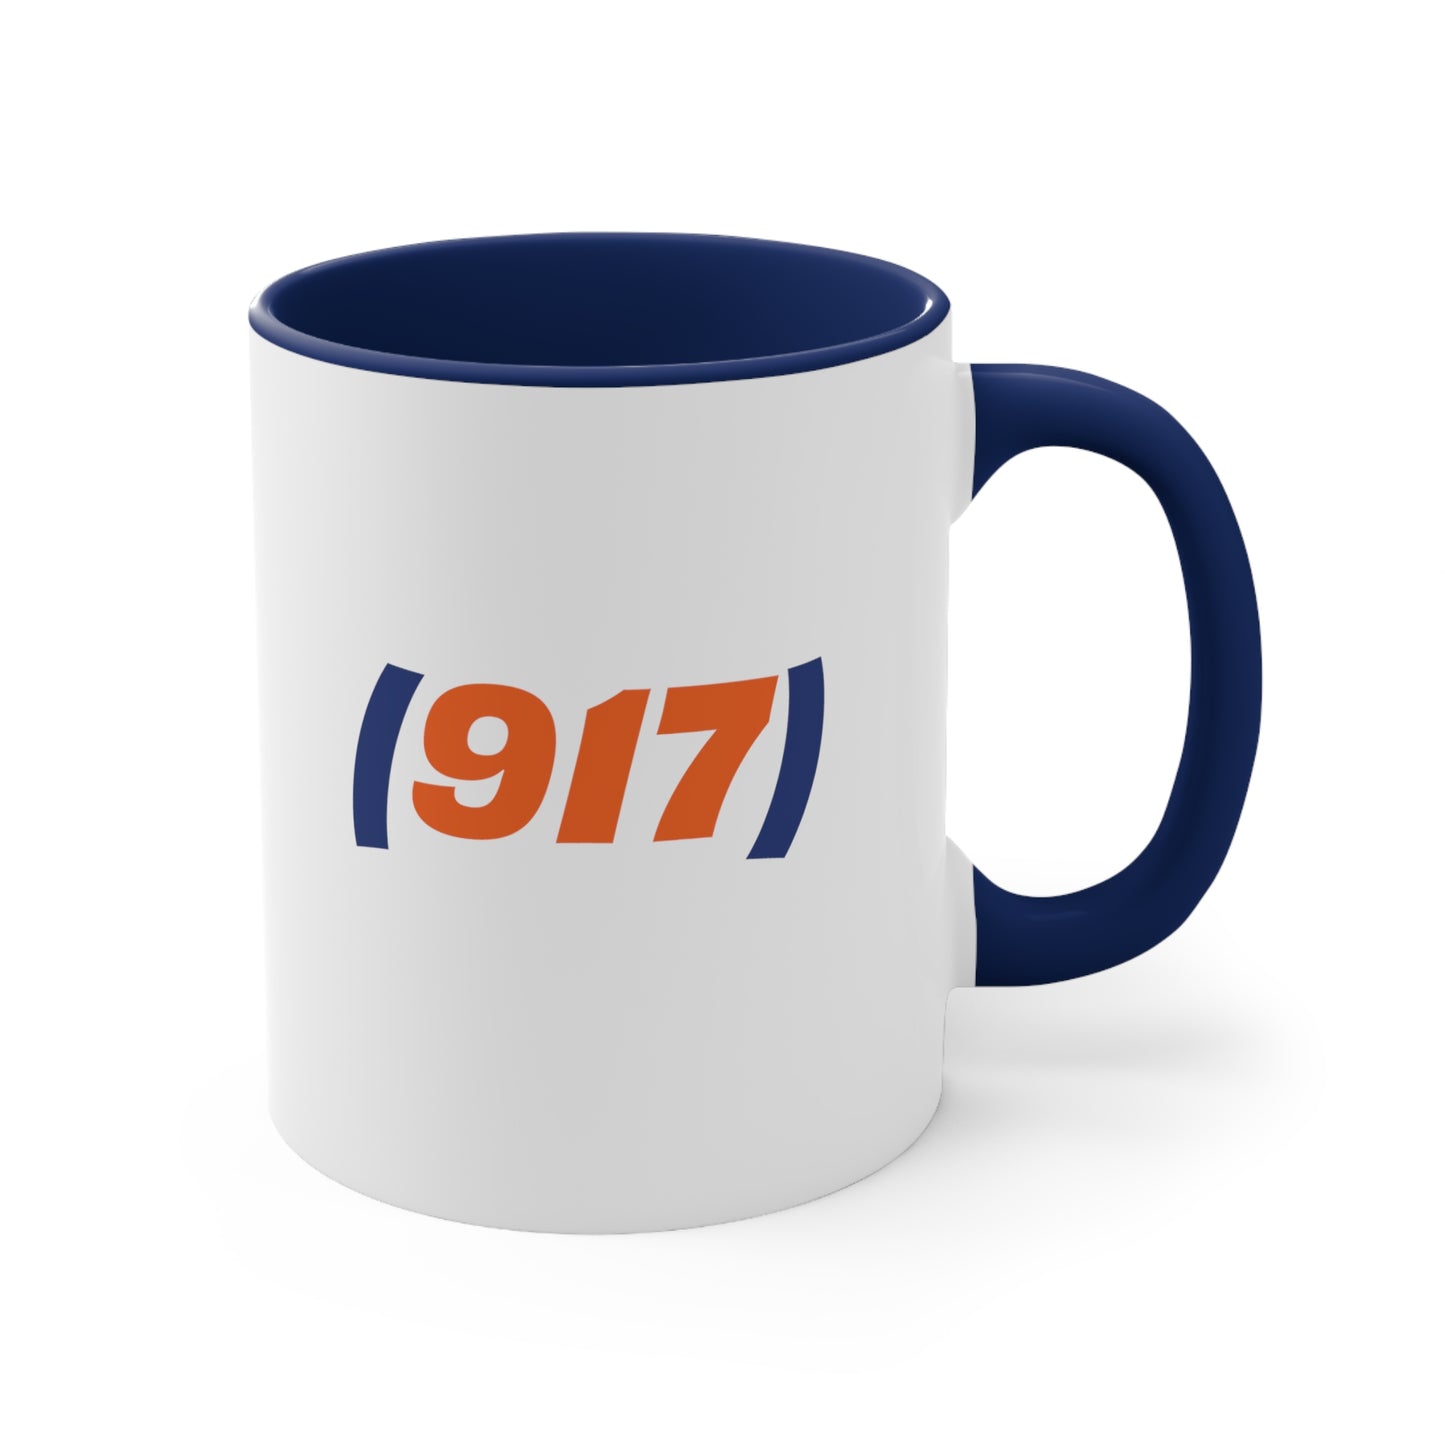 (917) Coffee Mug